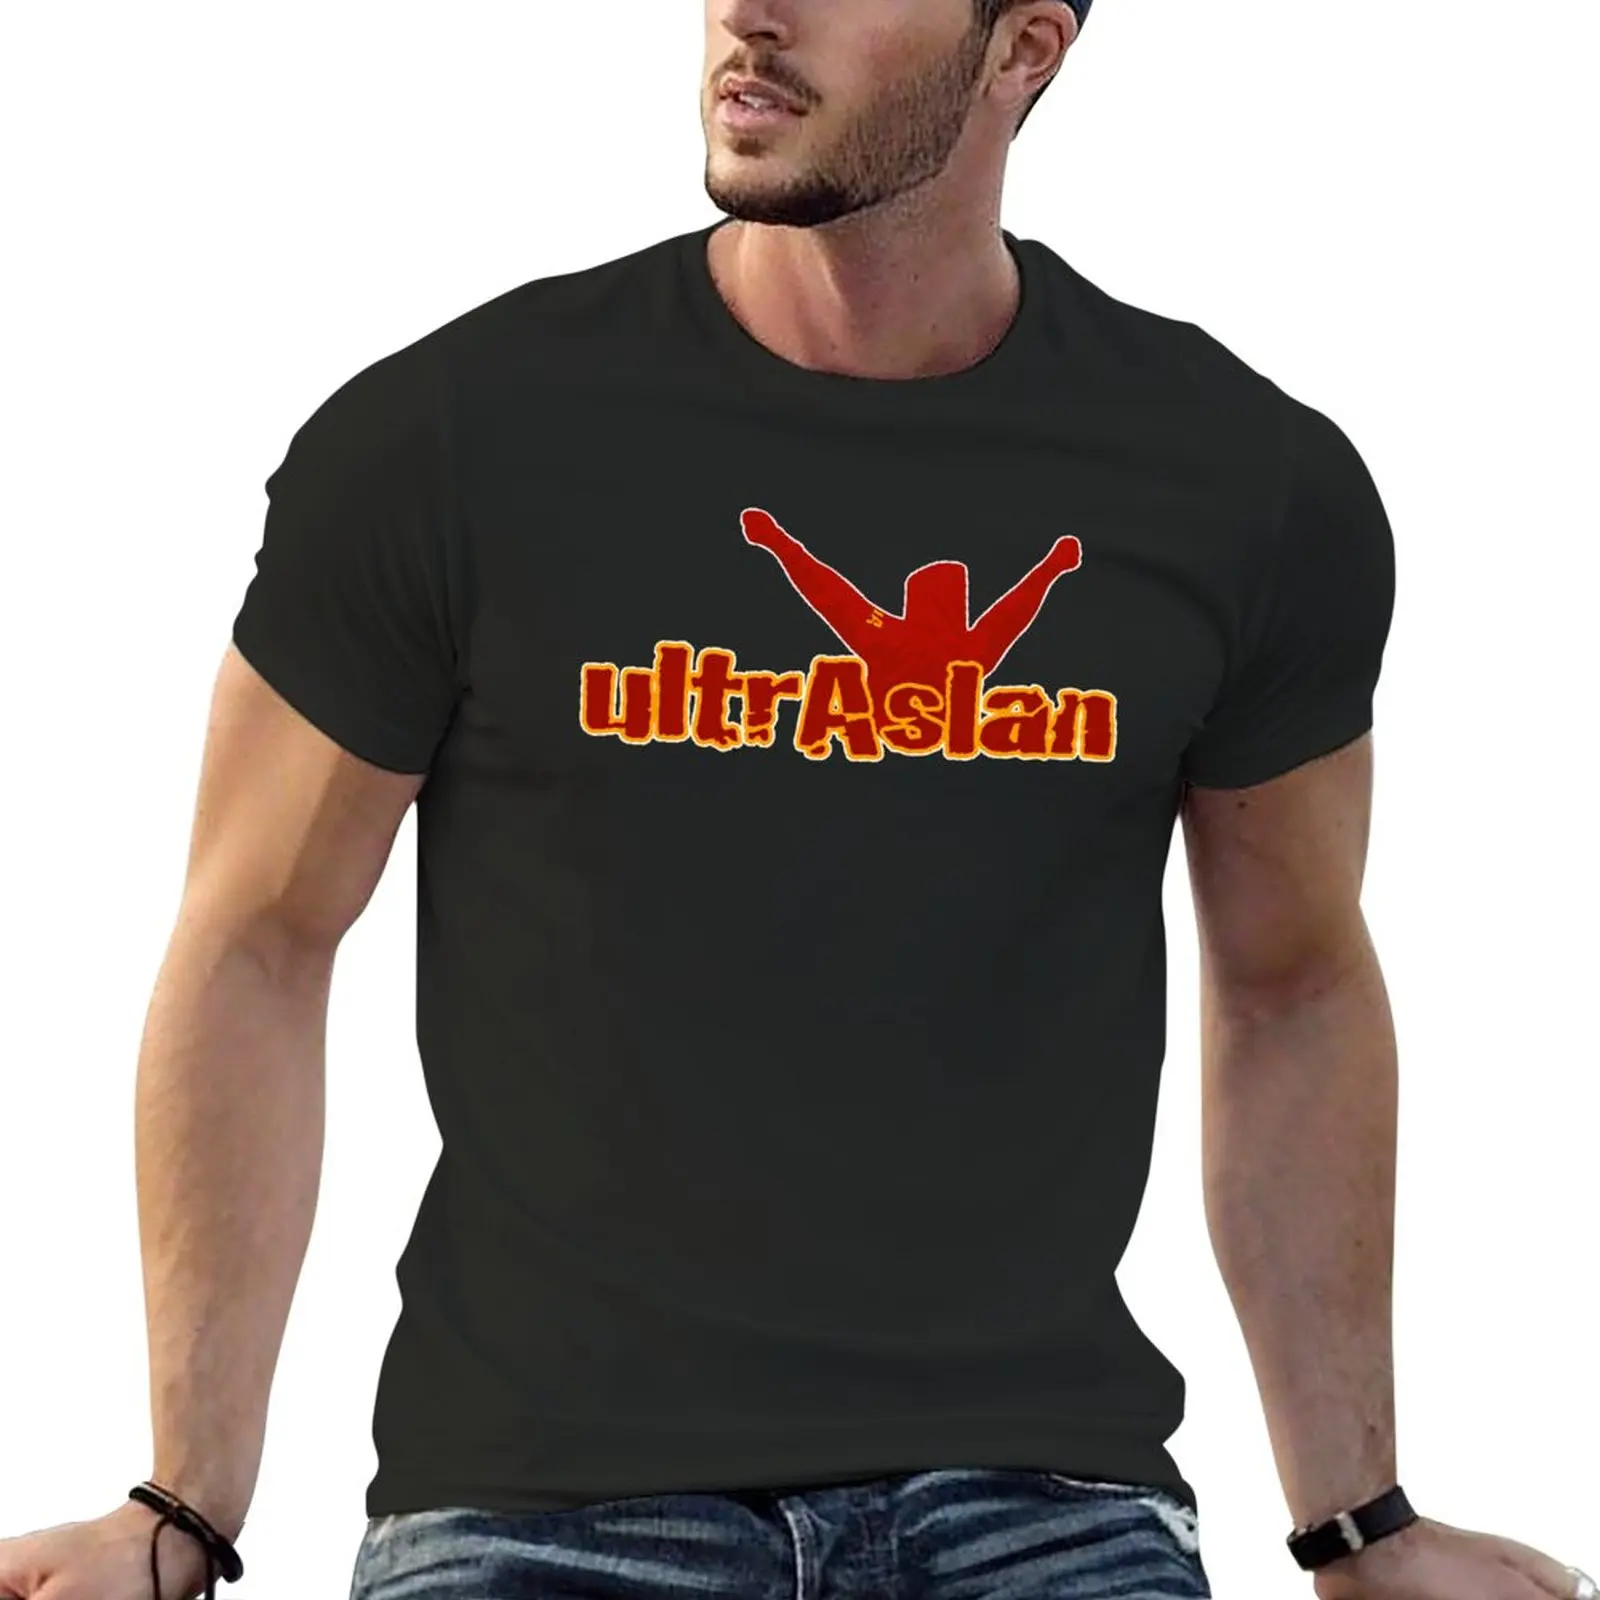 

Aslan Ultras ultrAslan Gala Football Fans Hooligans Firm T-Shirt animal print shirt for boys Blouse plain black t shirts men